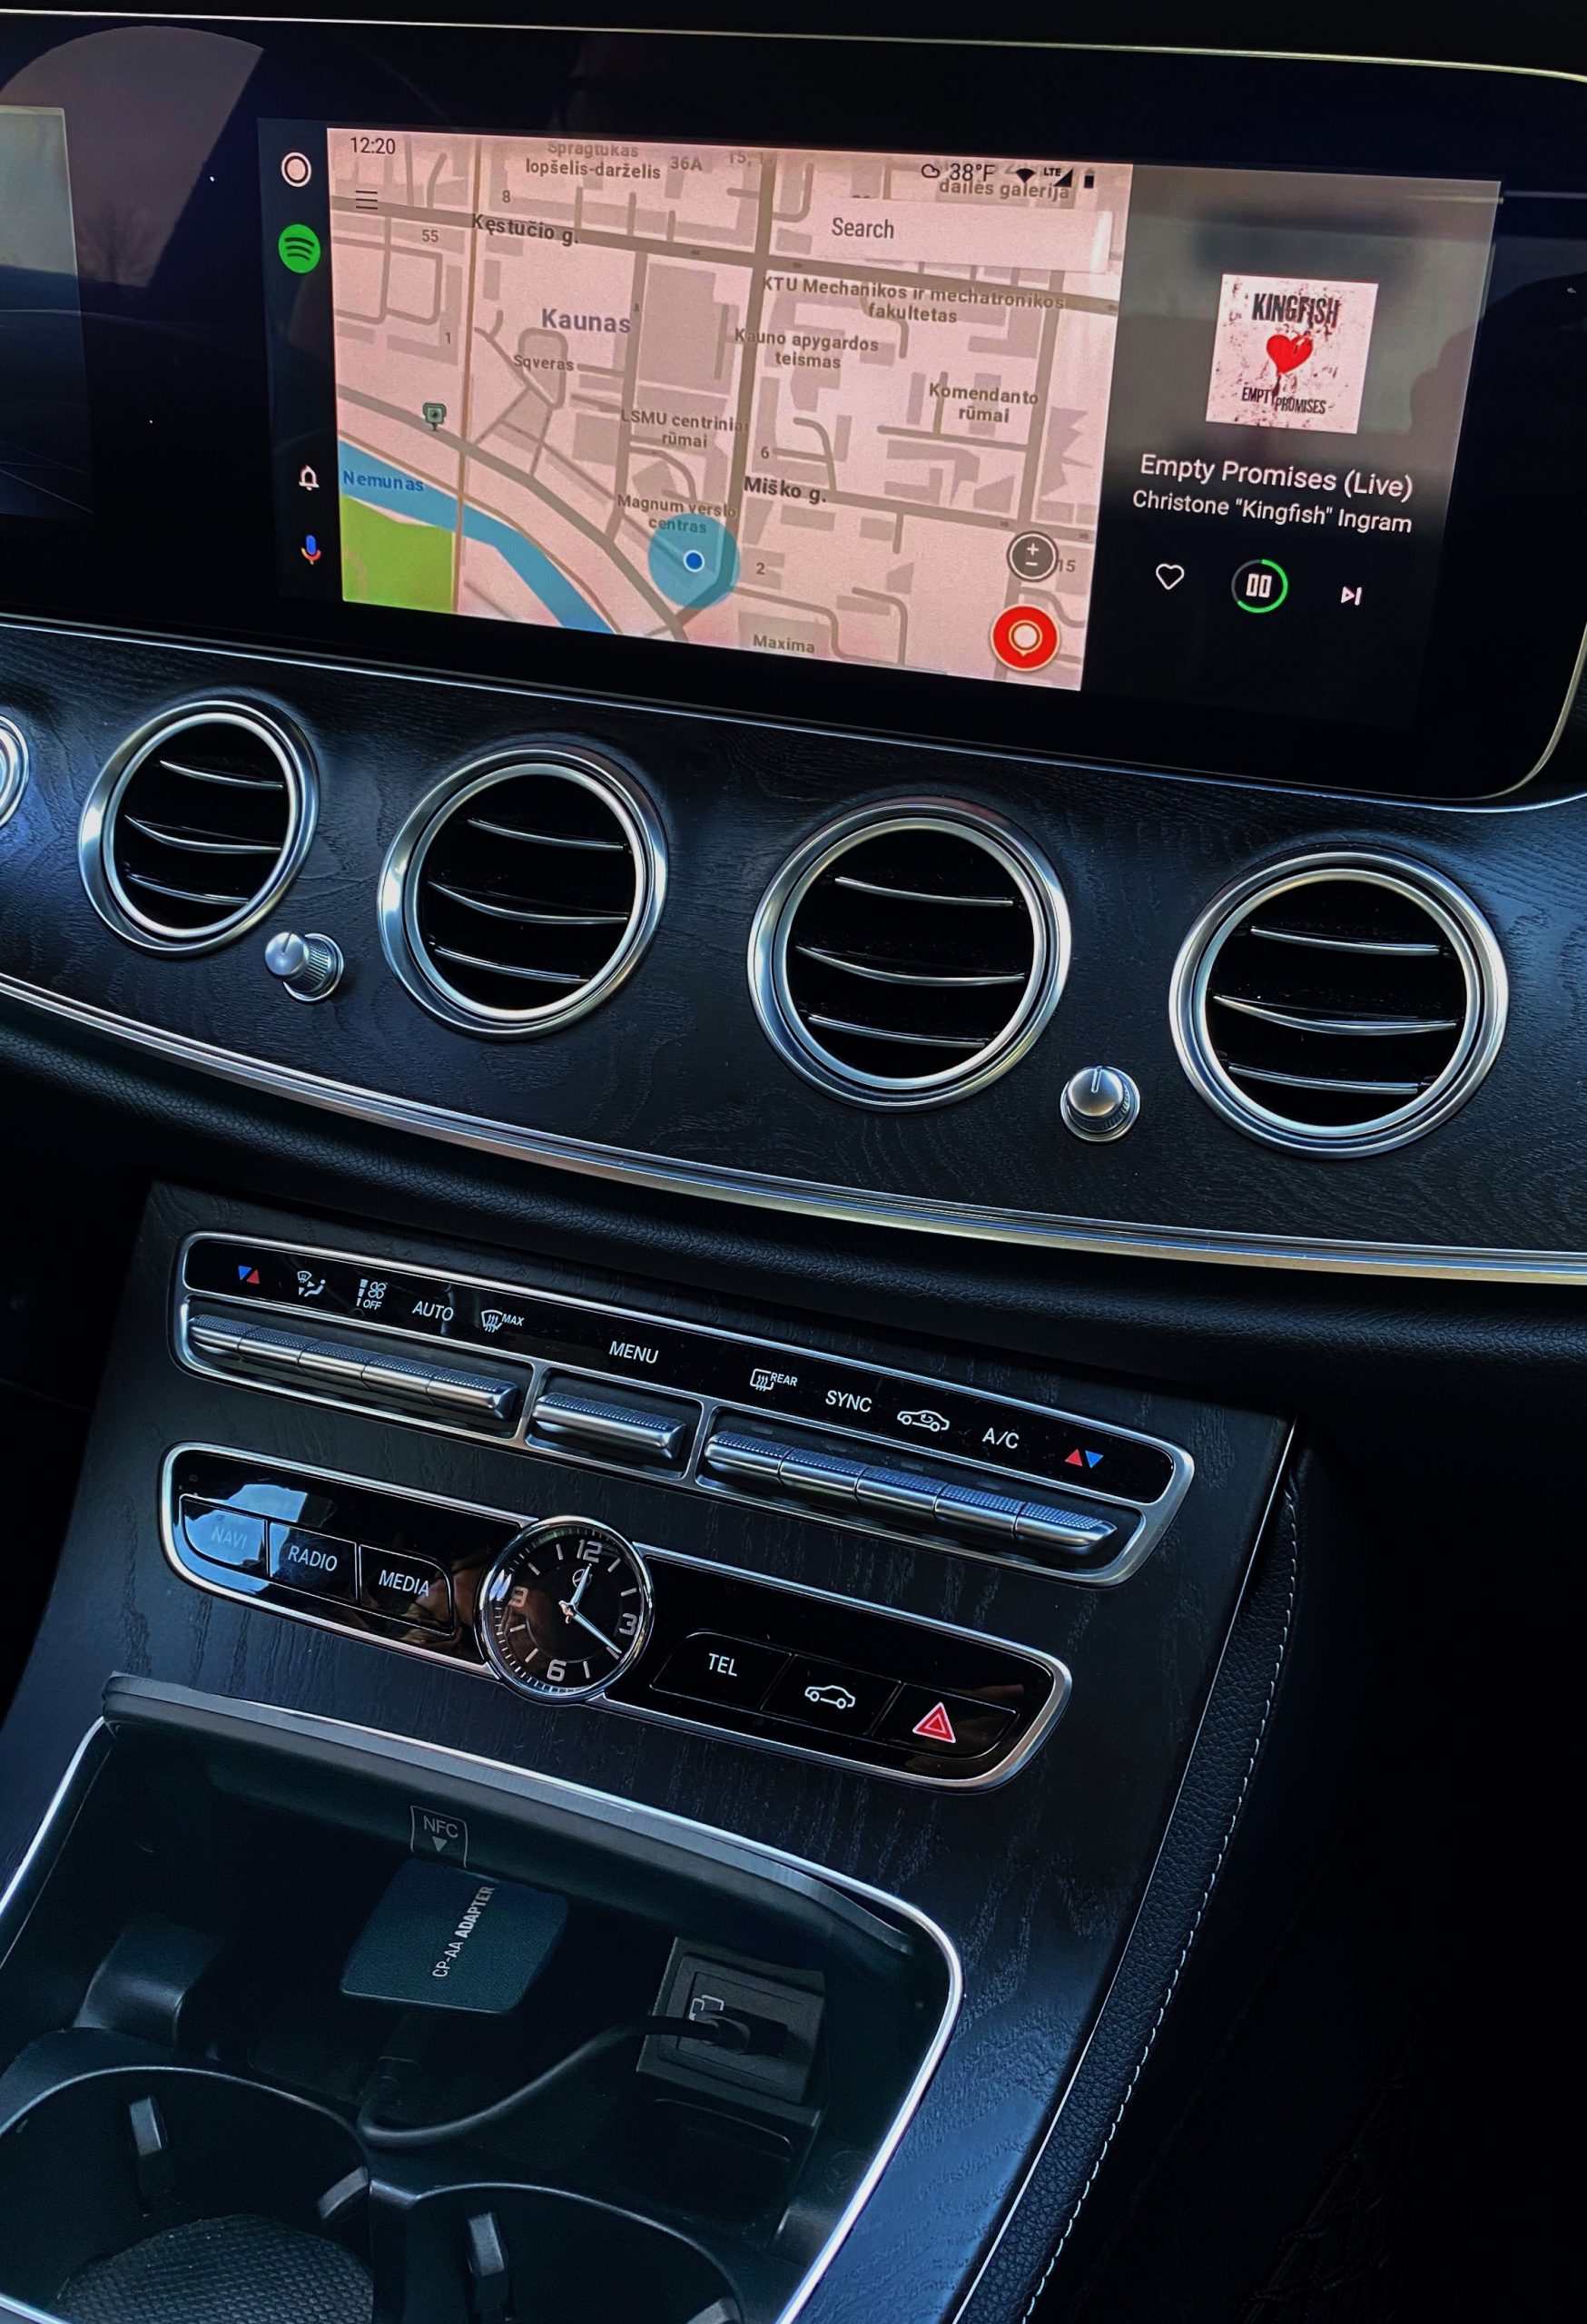 CarPlay sans Fil& Android Auto sans Fil Adaptateur, Car Play iOS sans Fil,  2-in-1